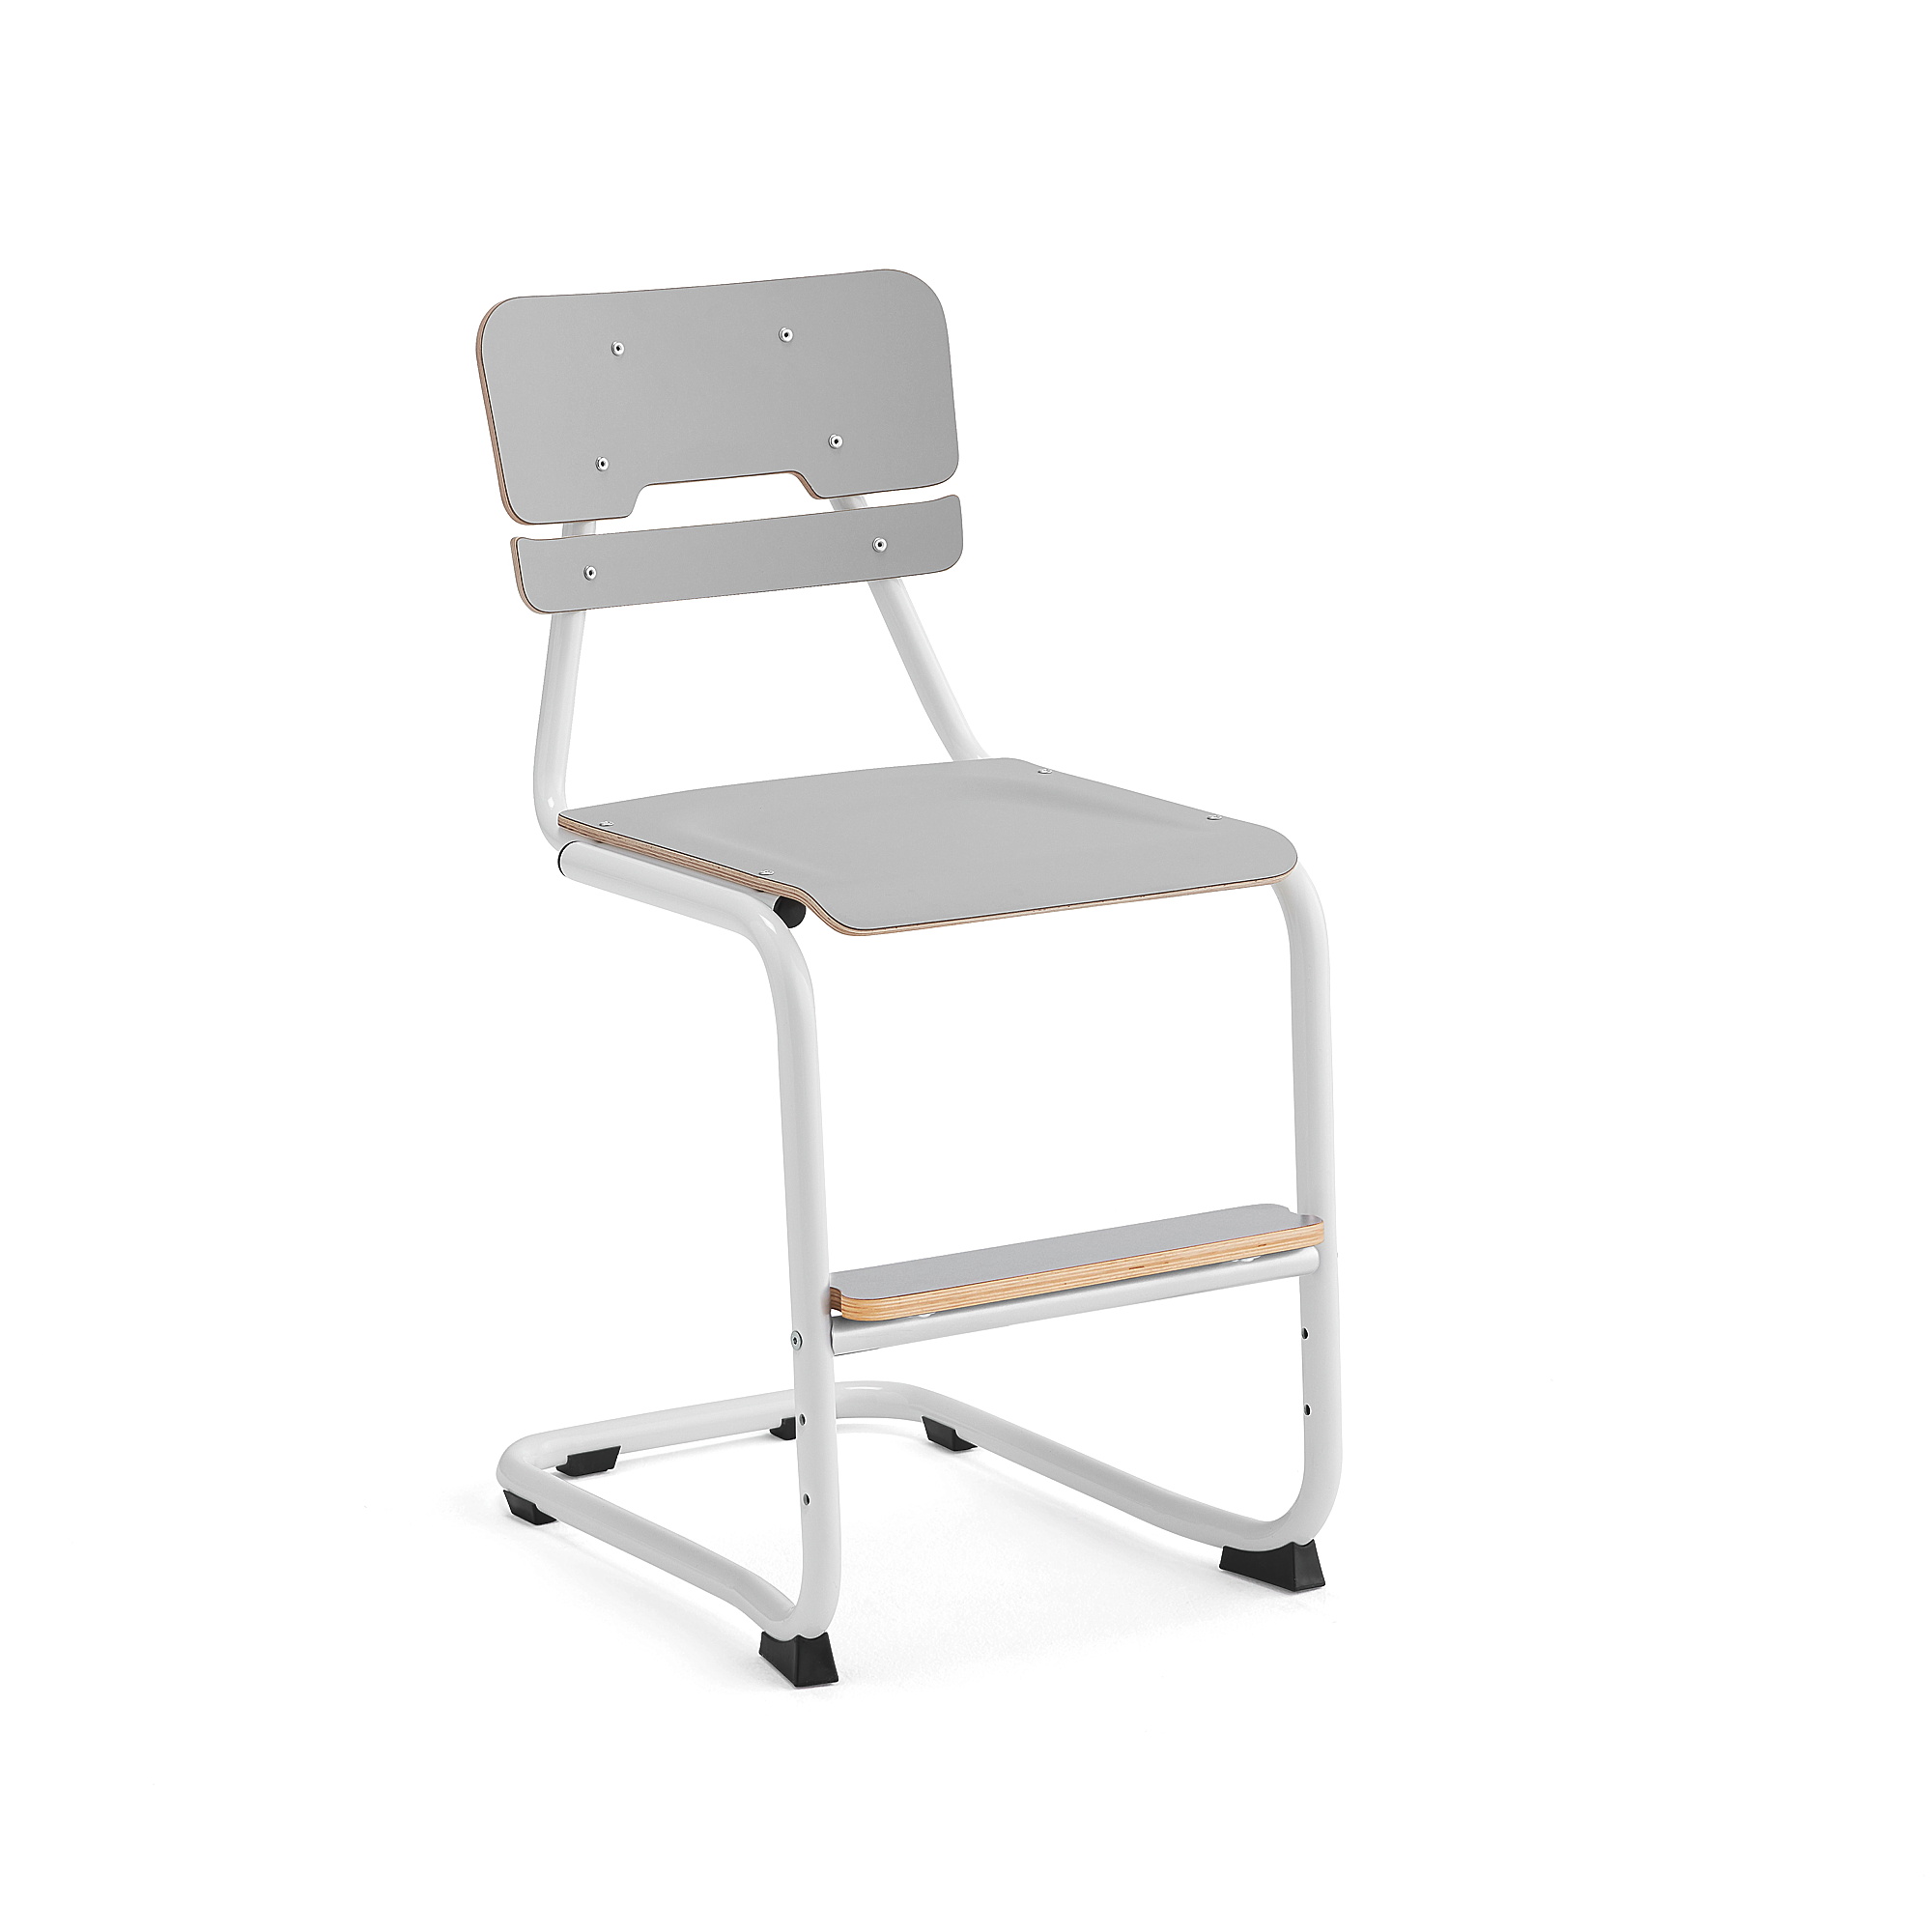 Školní židle LEGERE III, výška 500 mm, bílá, šedá